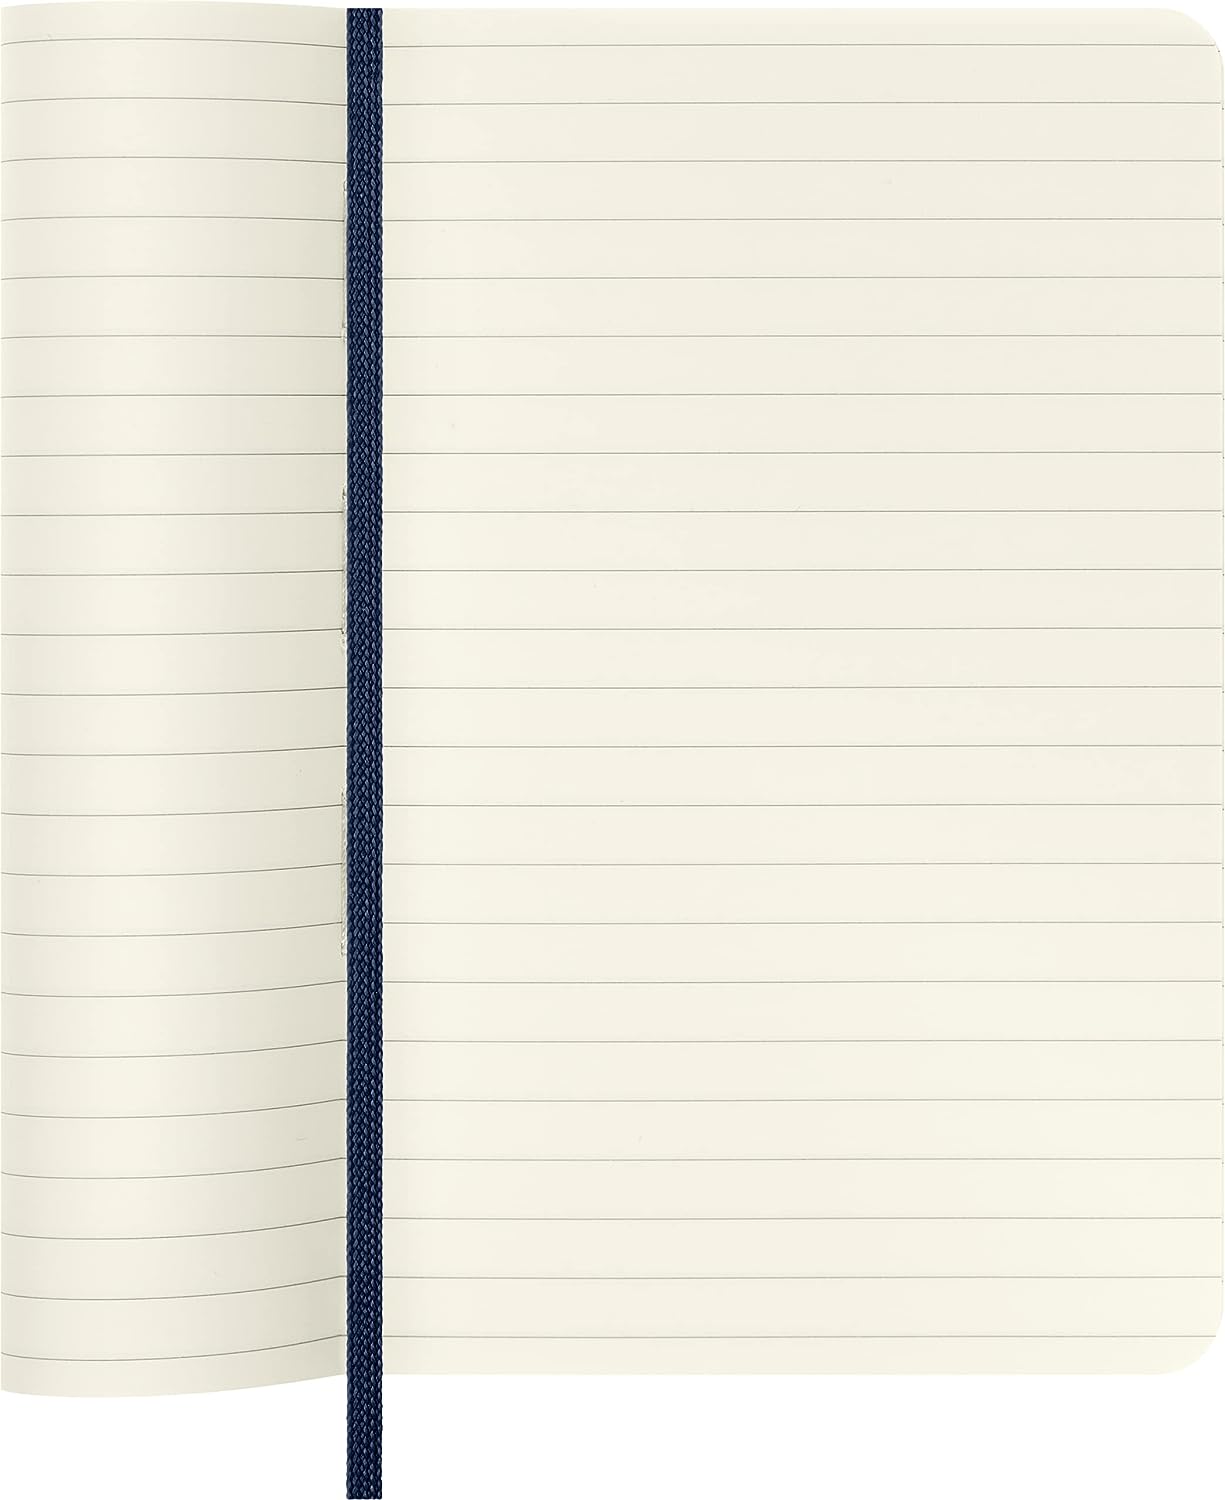 moleskine-ruled-soft-cover-pocket-notebook-sapphire-blue